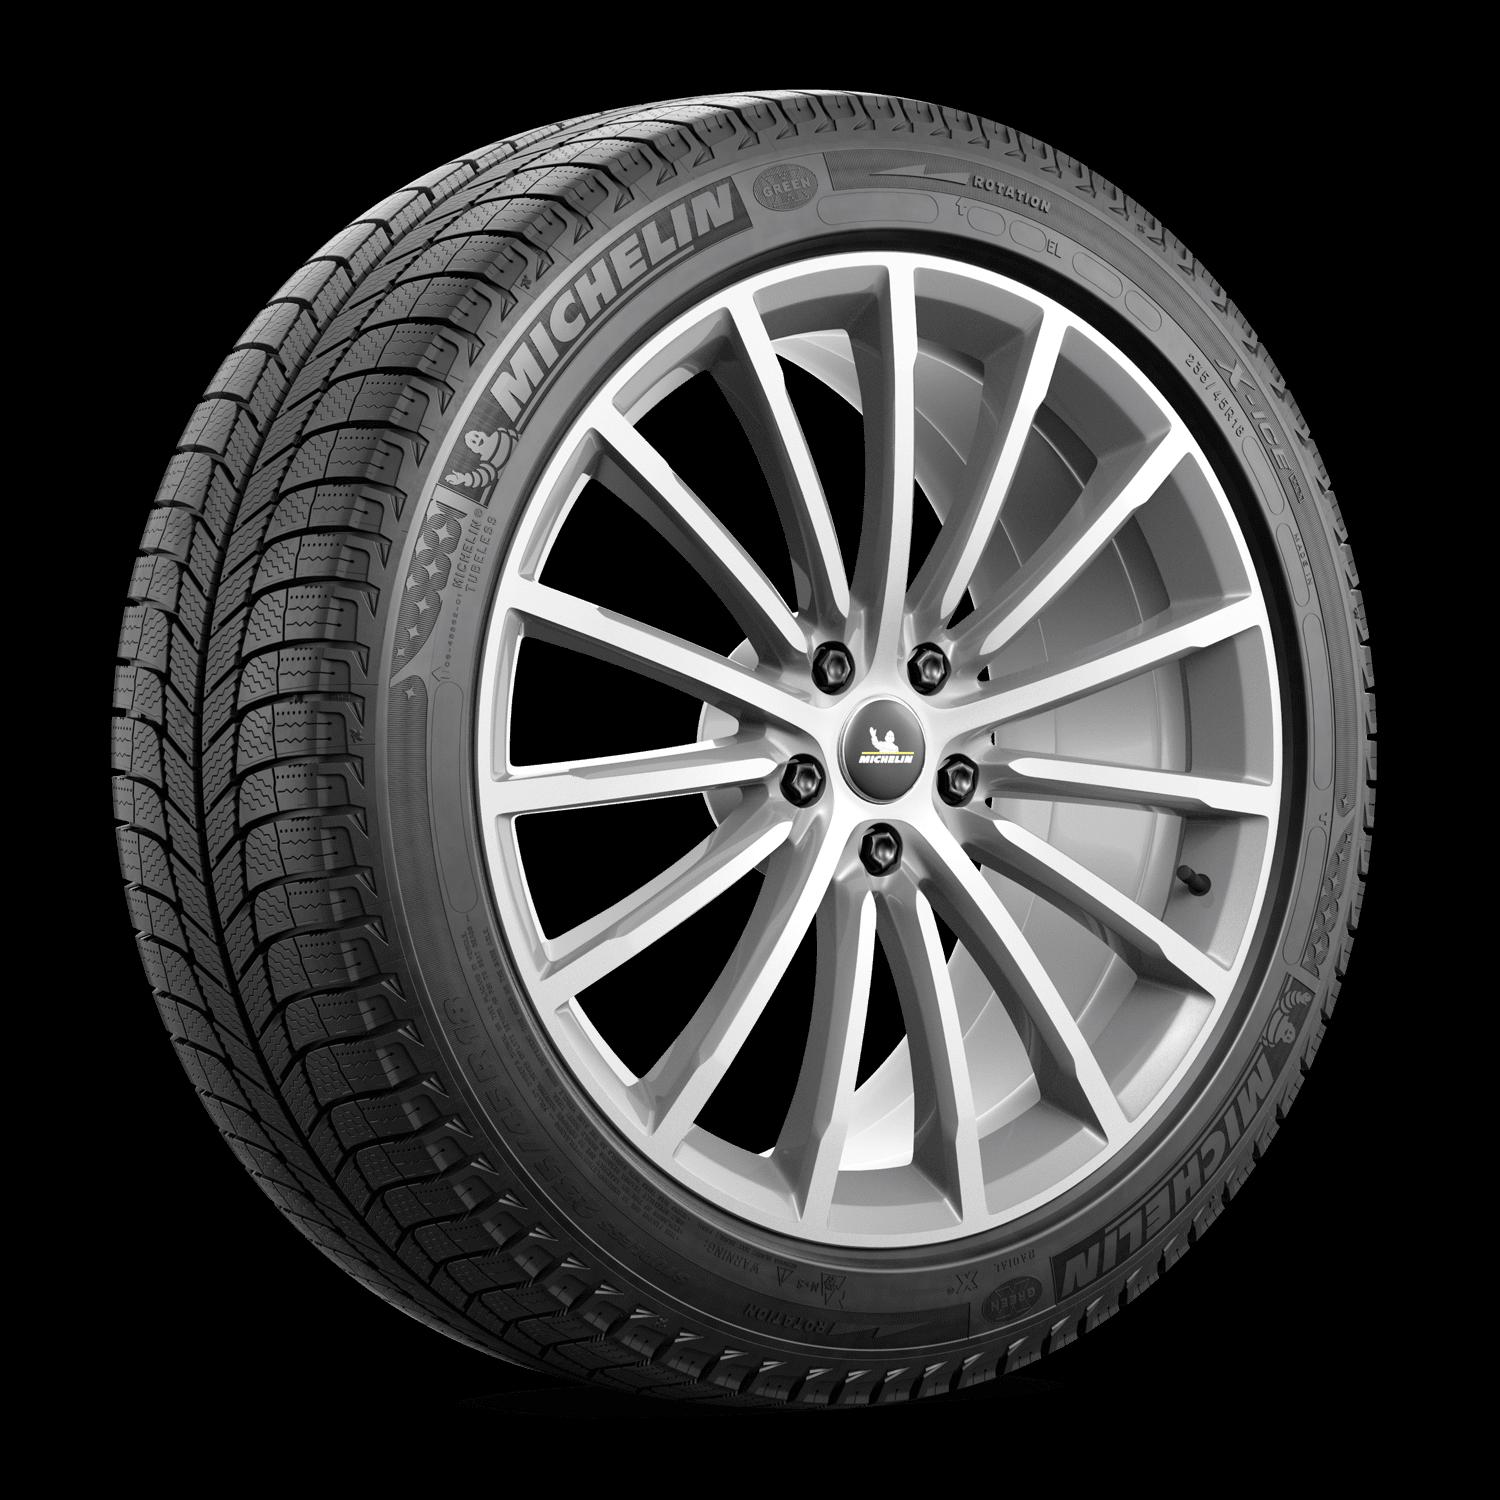 Michelin X-Ice Xi3 Winter 205/65R16 99T XL Passenger Tire